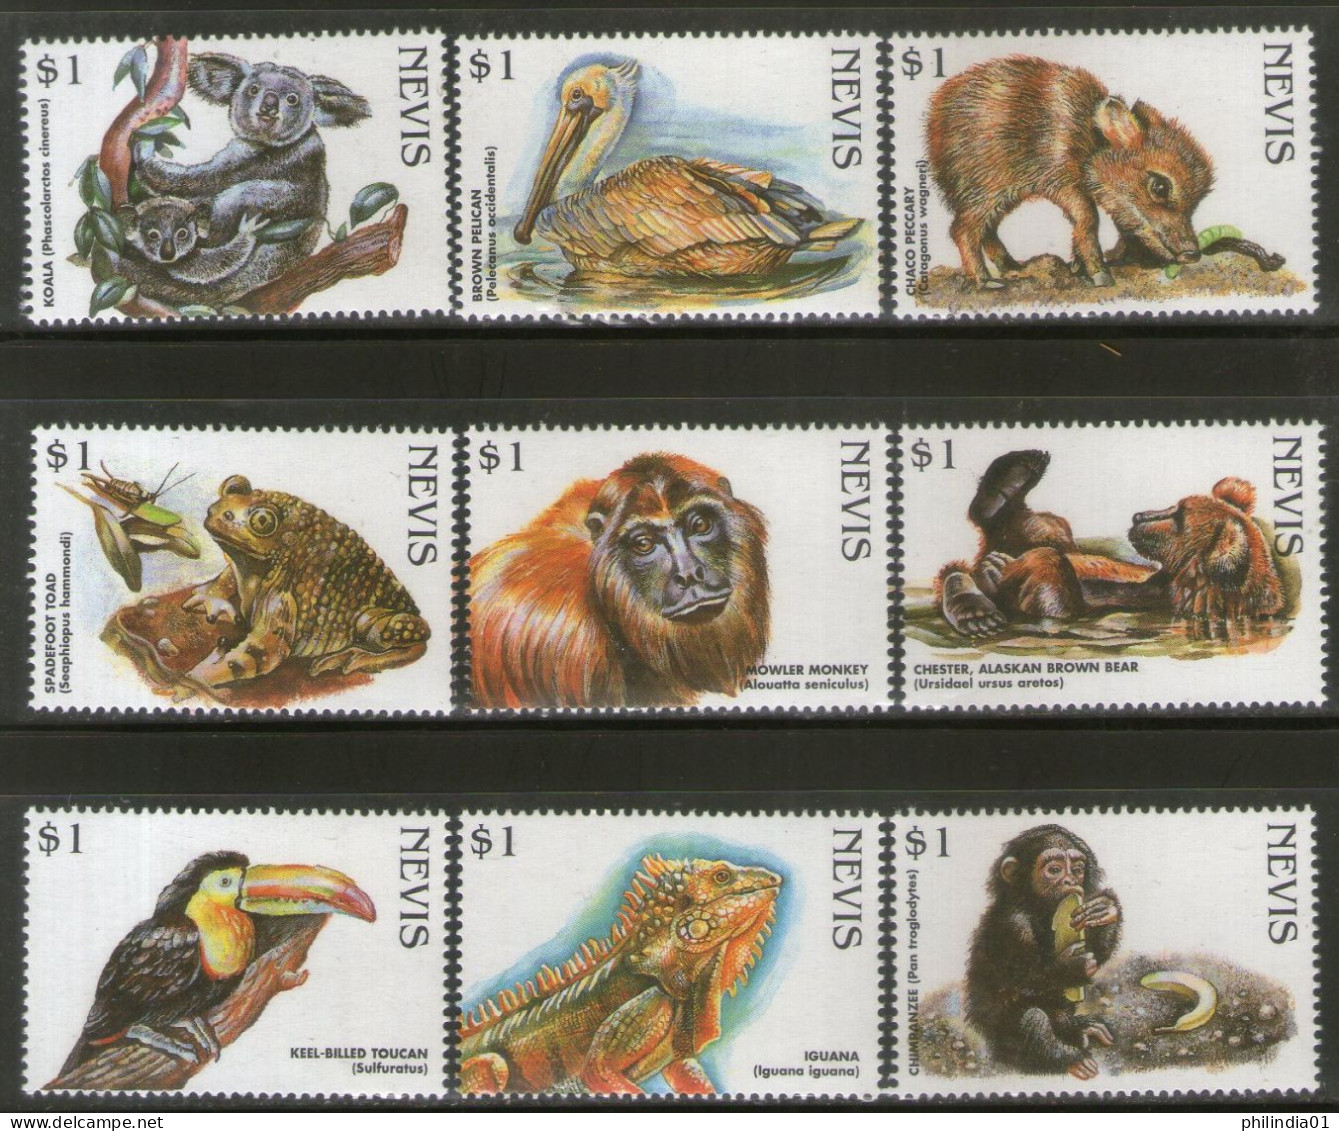 Nevis 1998 Endangered Species Birds Monkey Bear Wildlife Animals Sc 1073 9v MNH # 196 - Mono